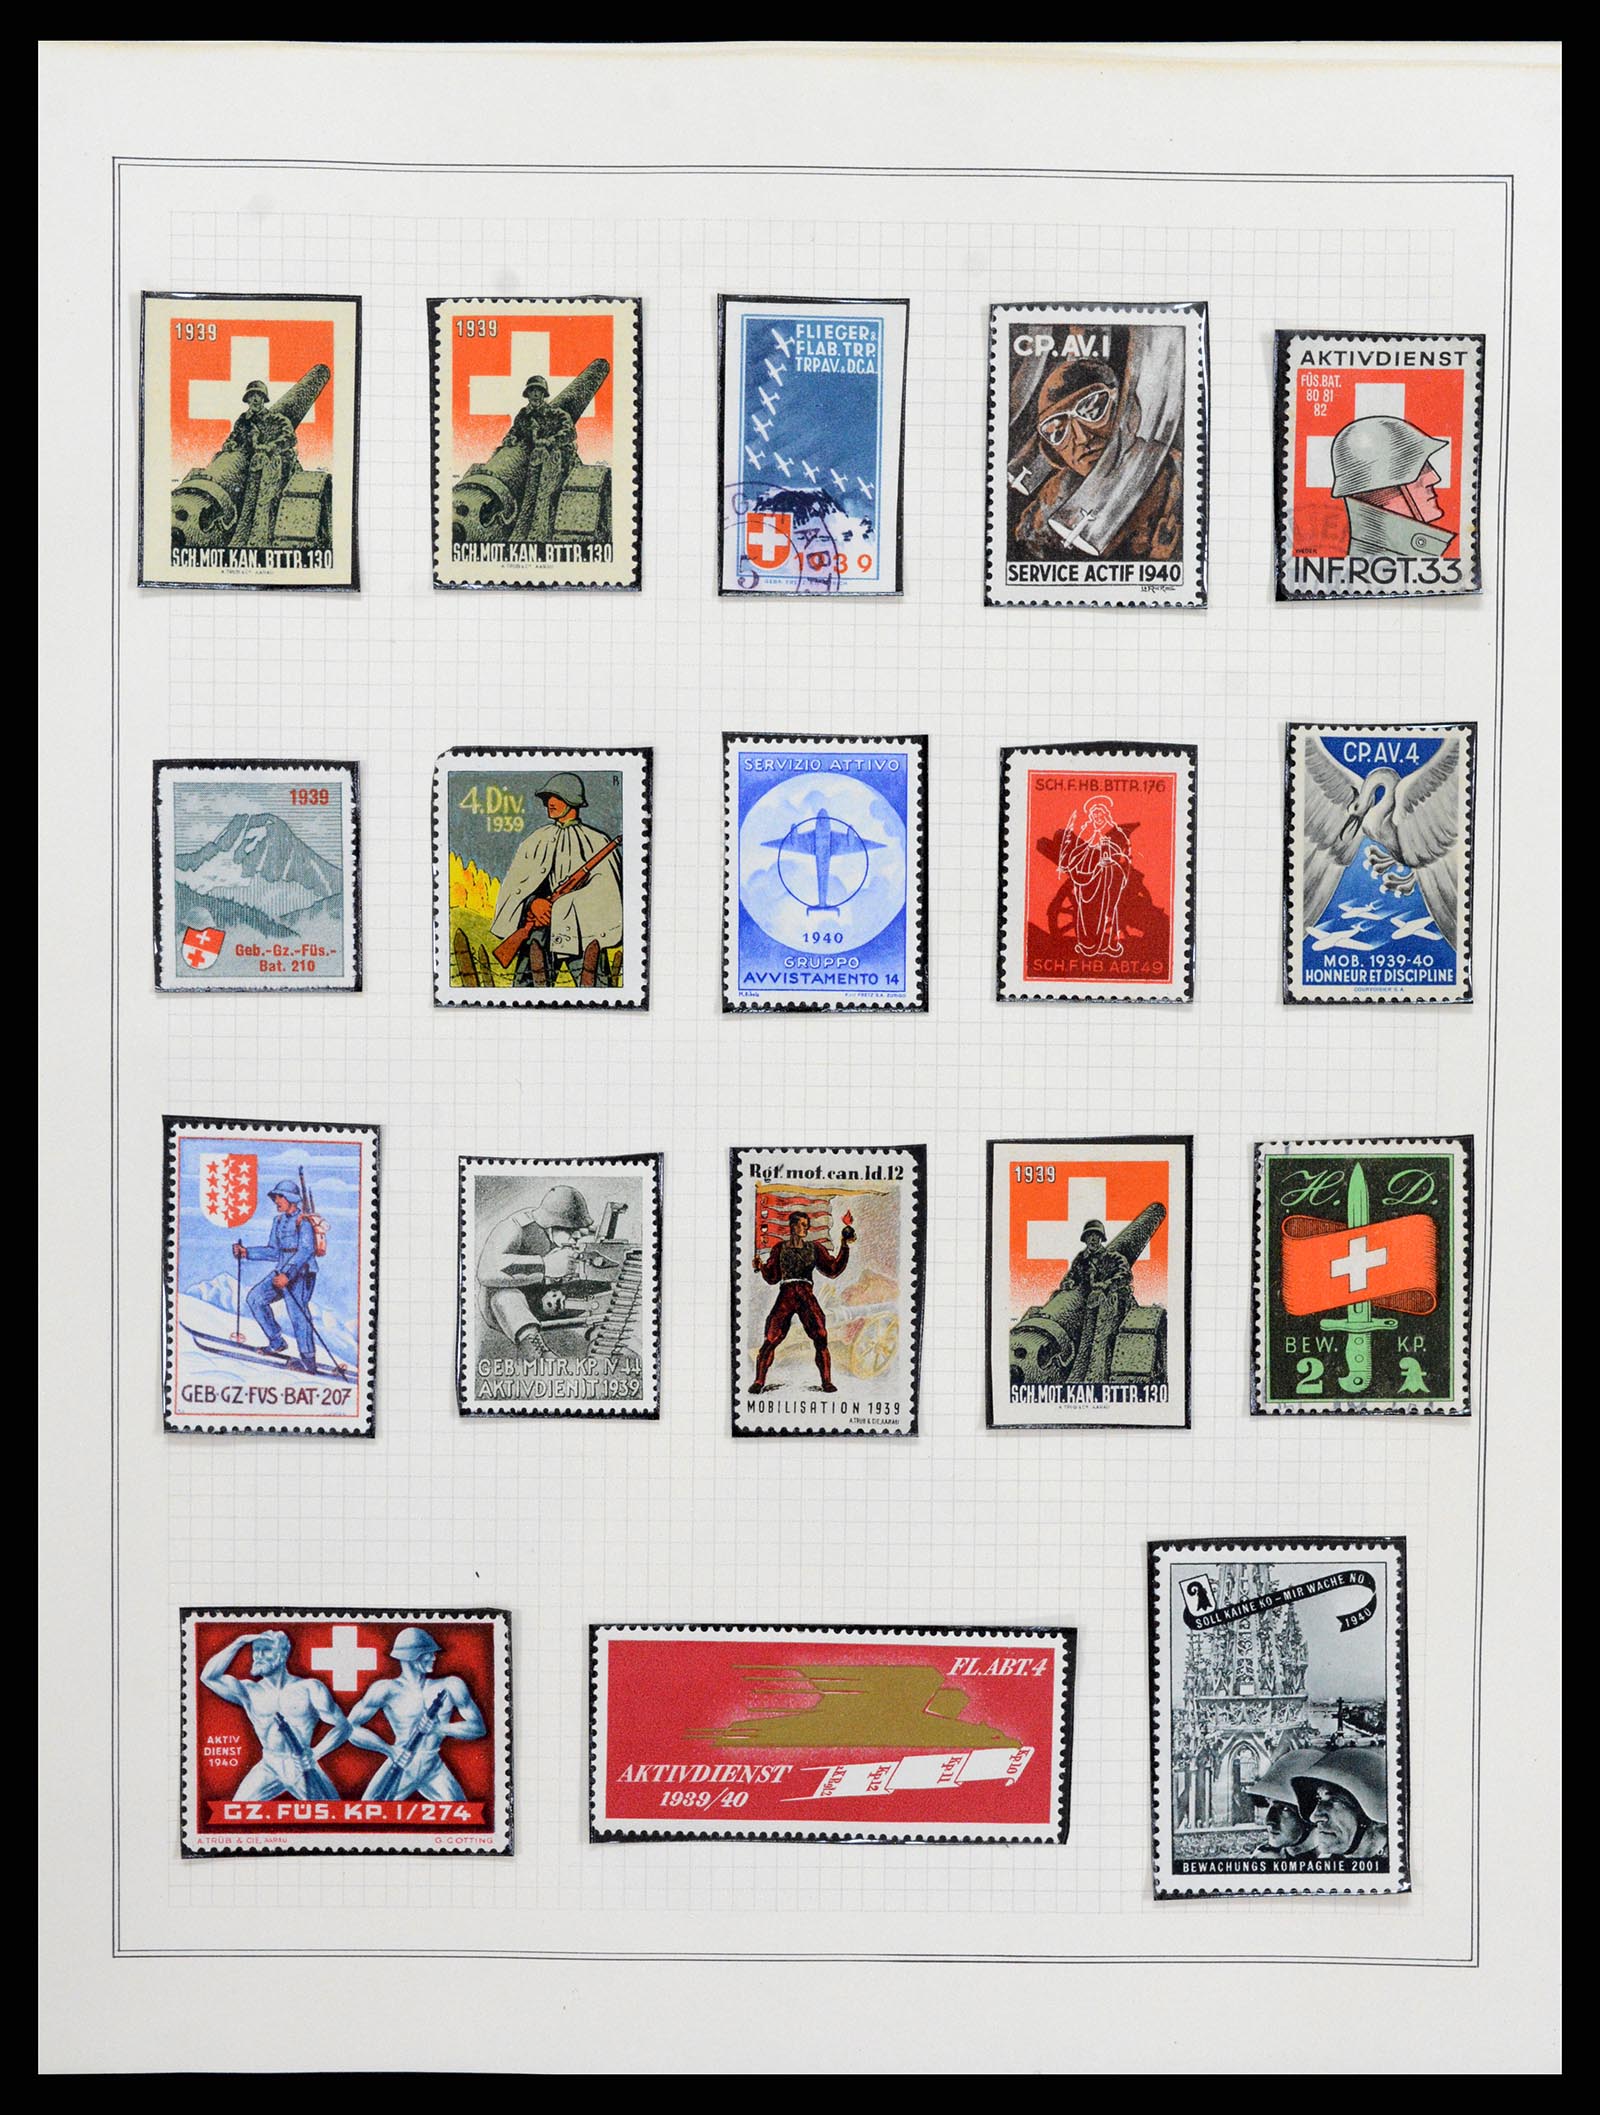 37642 054 - Stamp collection 37642 Switzerland soldier stamps 1914-1945.